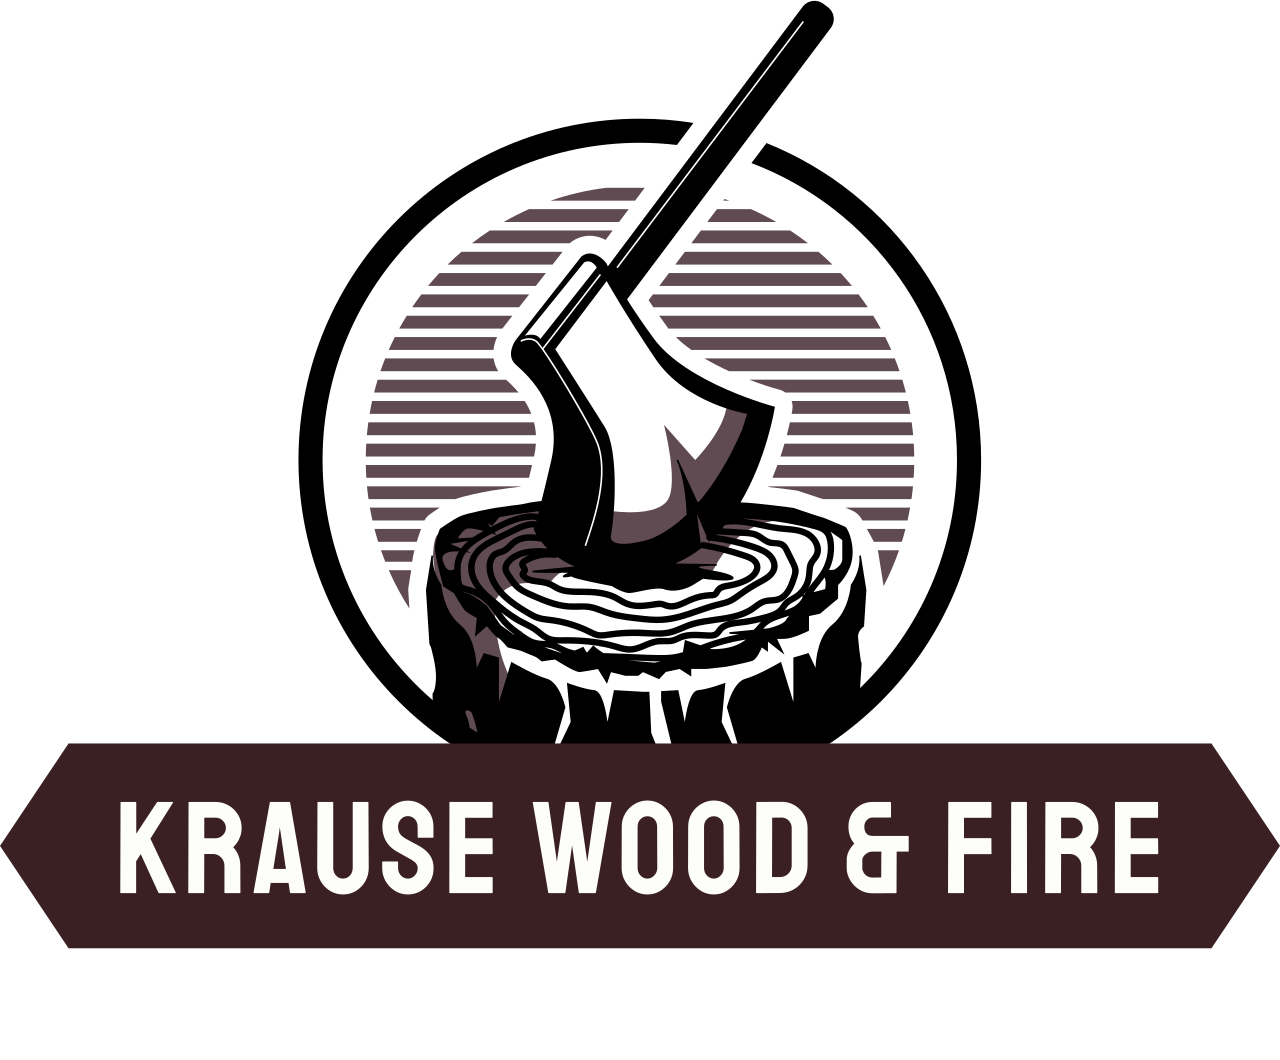 Krause wood & fire's logo